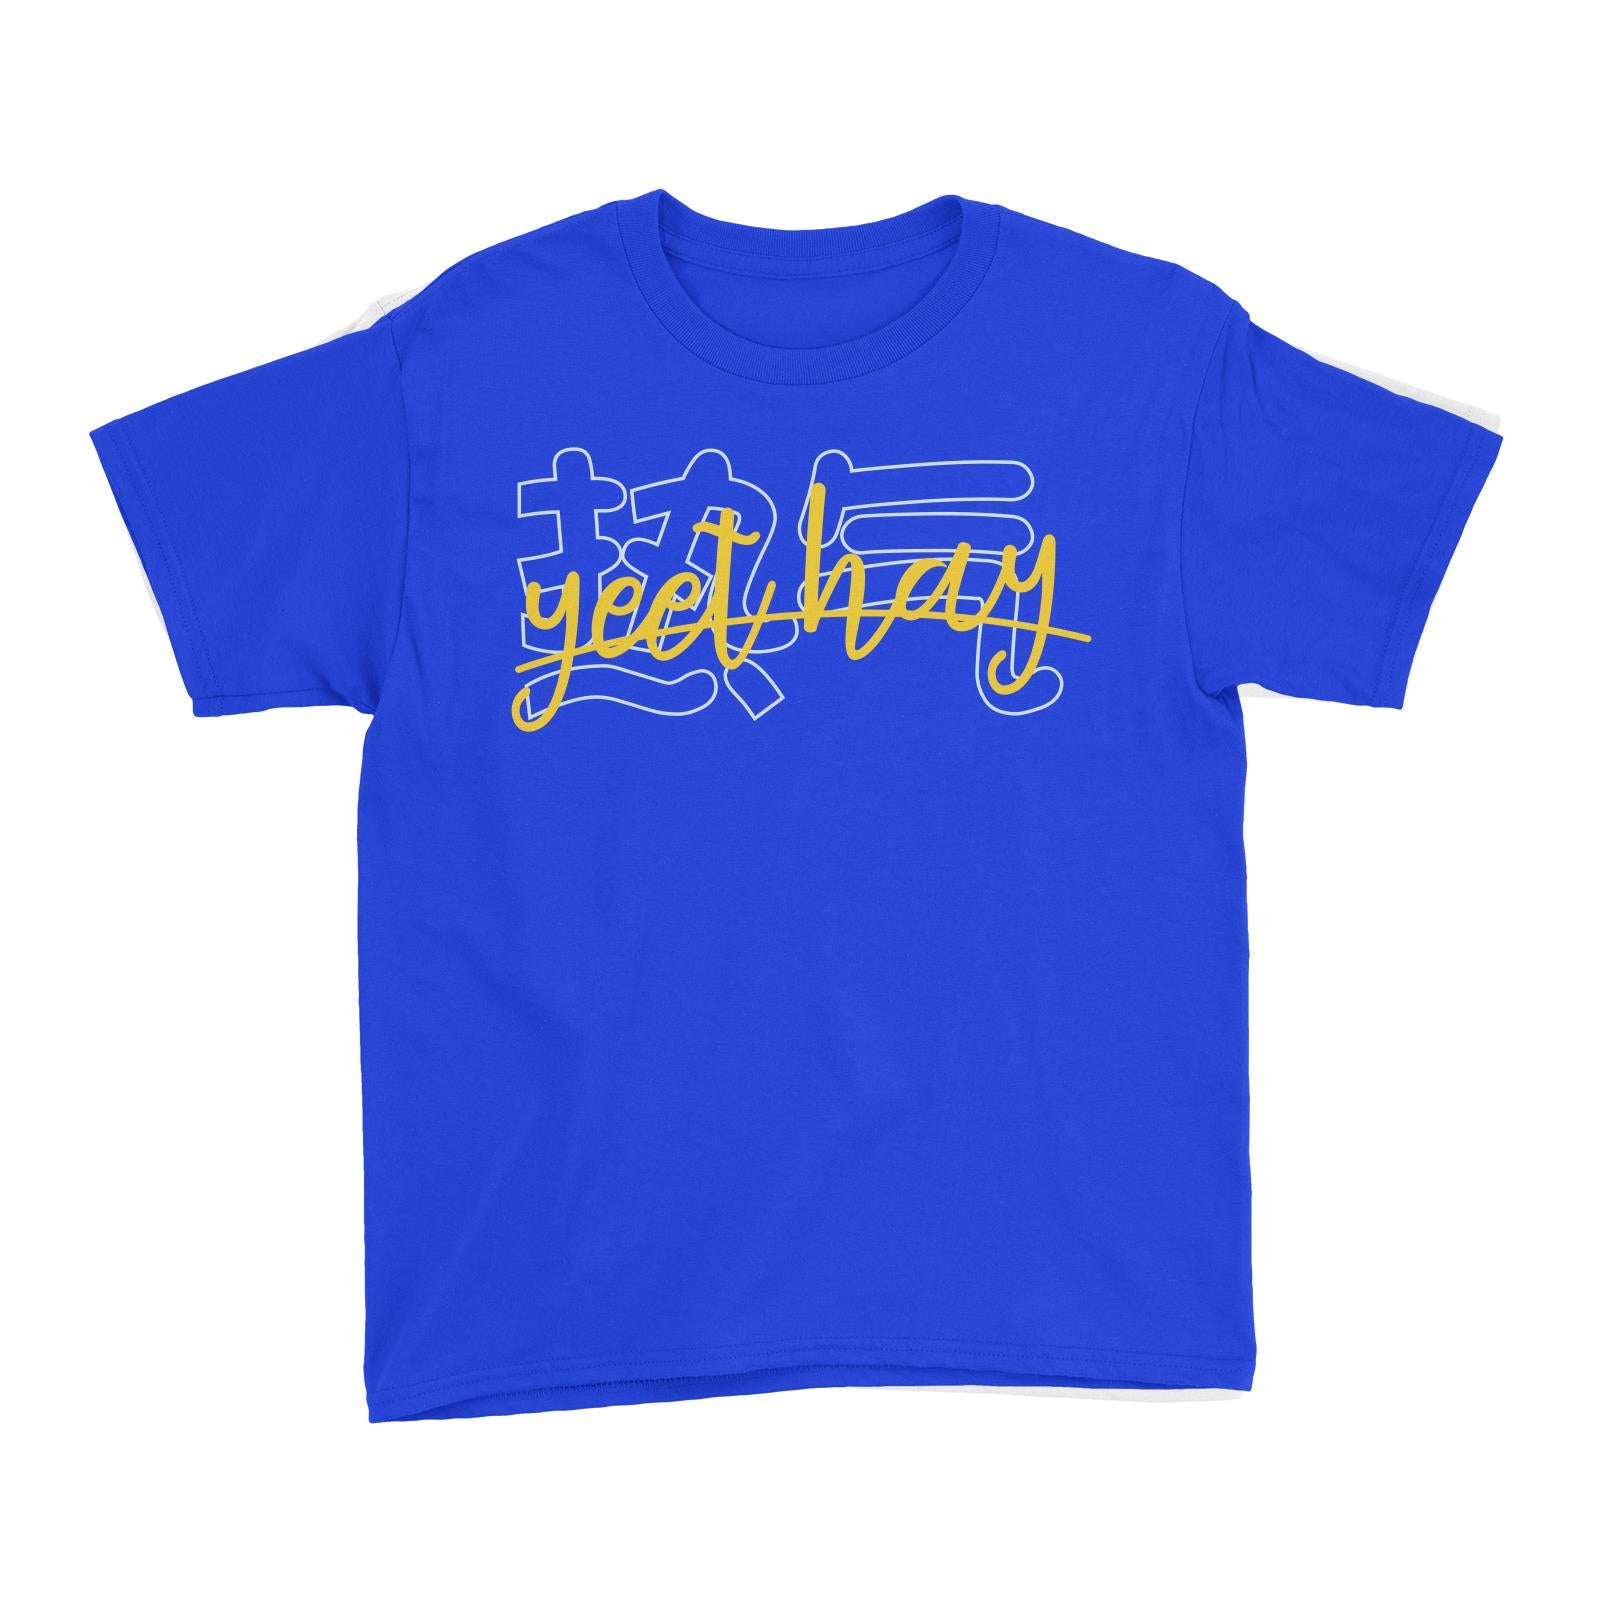 Slang Statement Yeet Hay Kid's T-Shirt